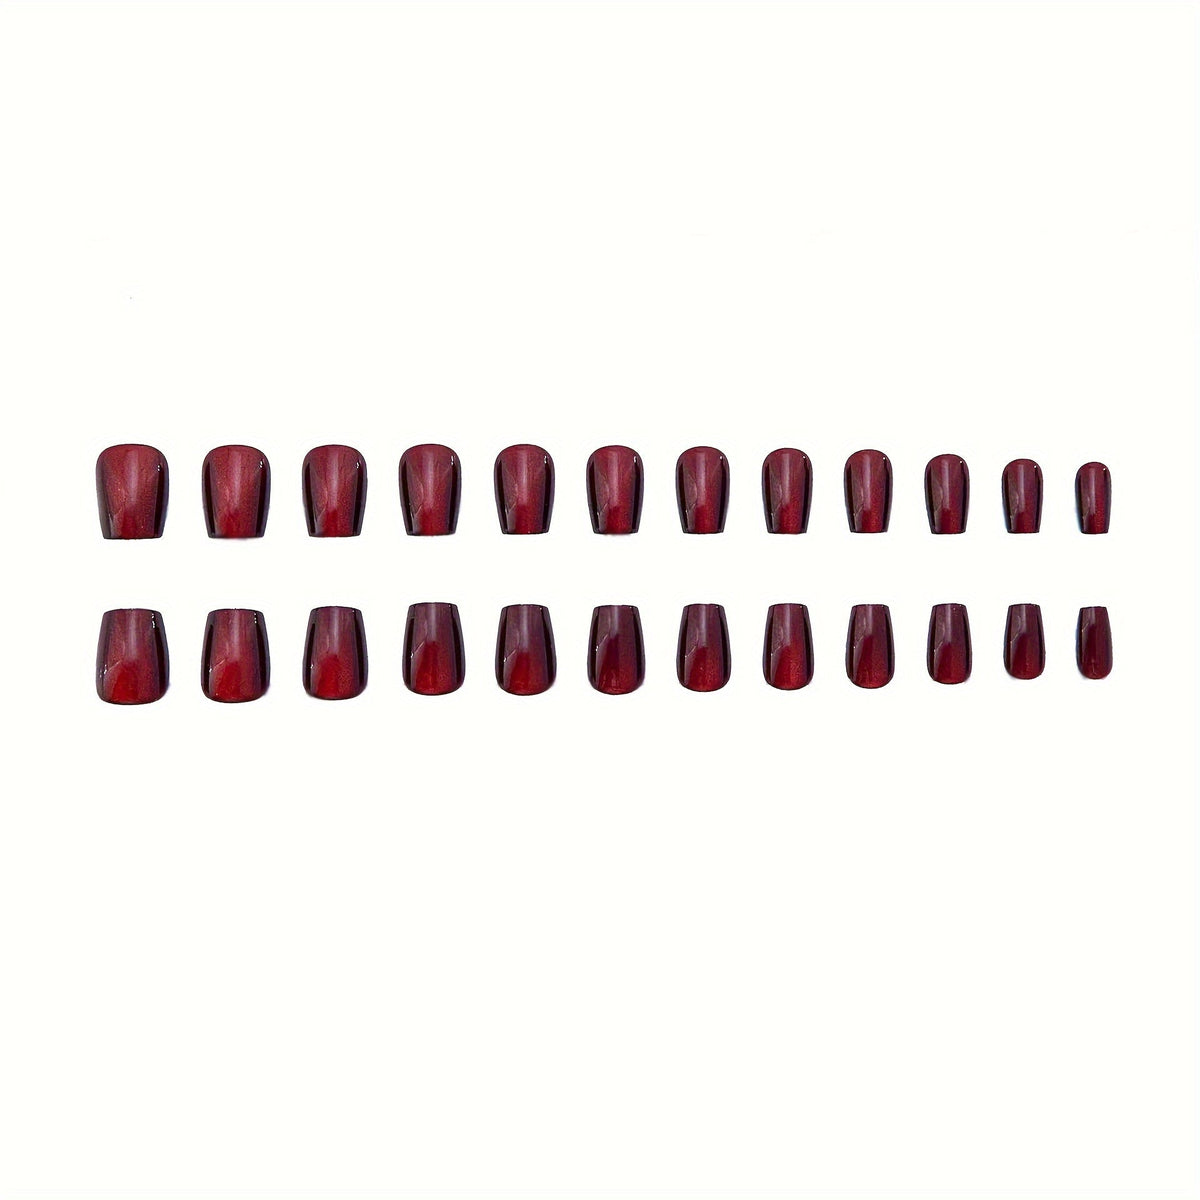 24Pcs Red Cat Eye Glitter Press On Nails - Medium Square Glossy Full Cover False Nails for Women